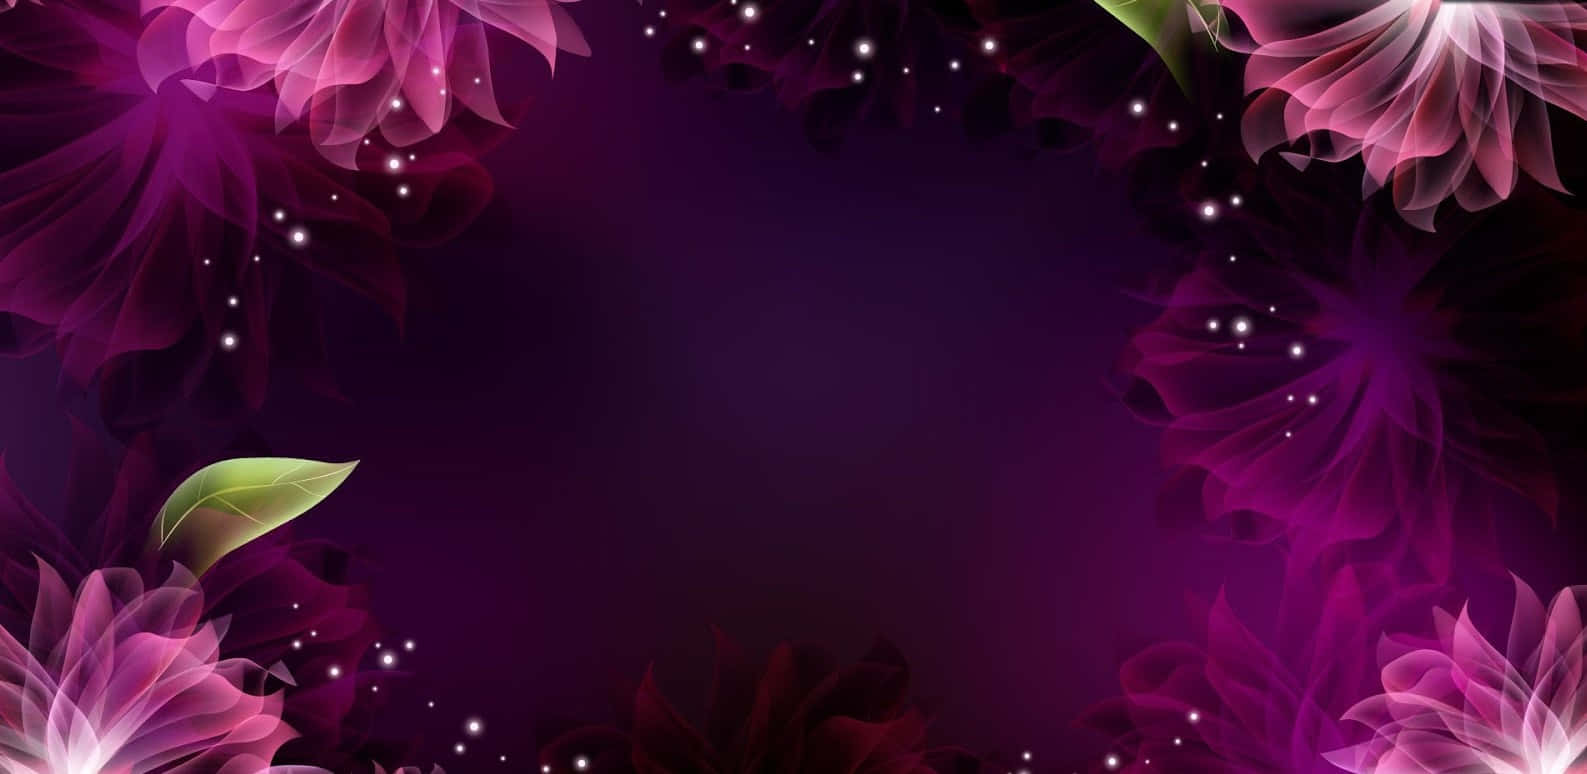 Purple Flowers On A Dark Background